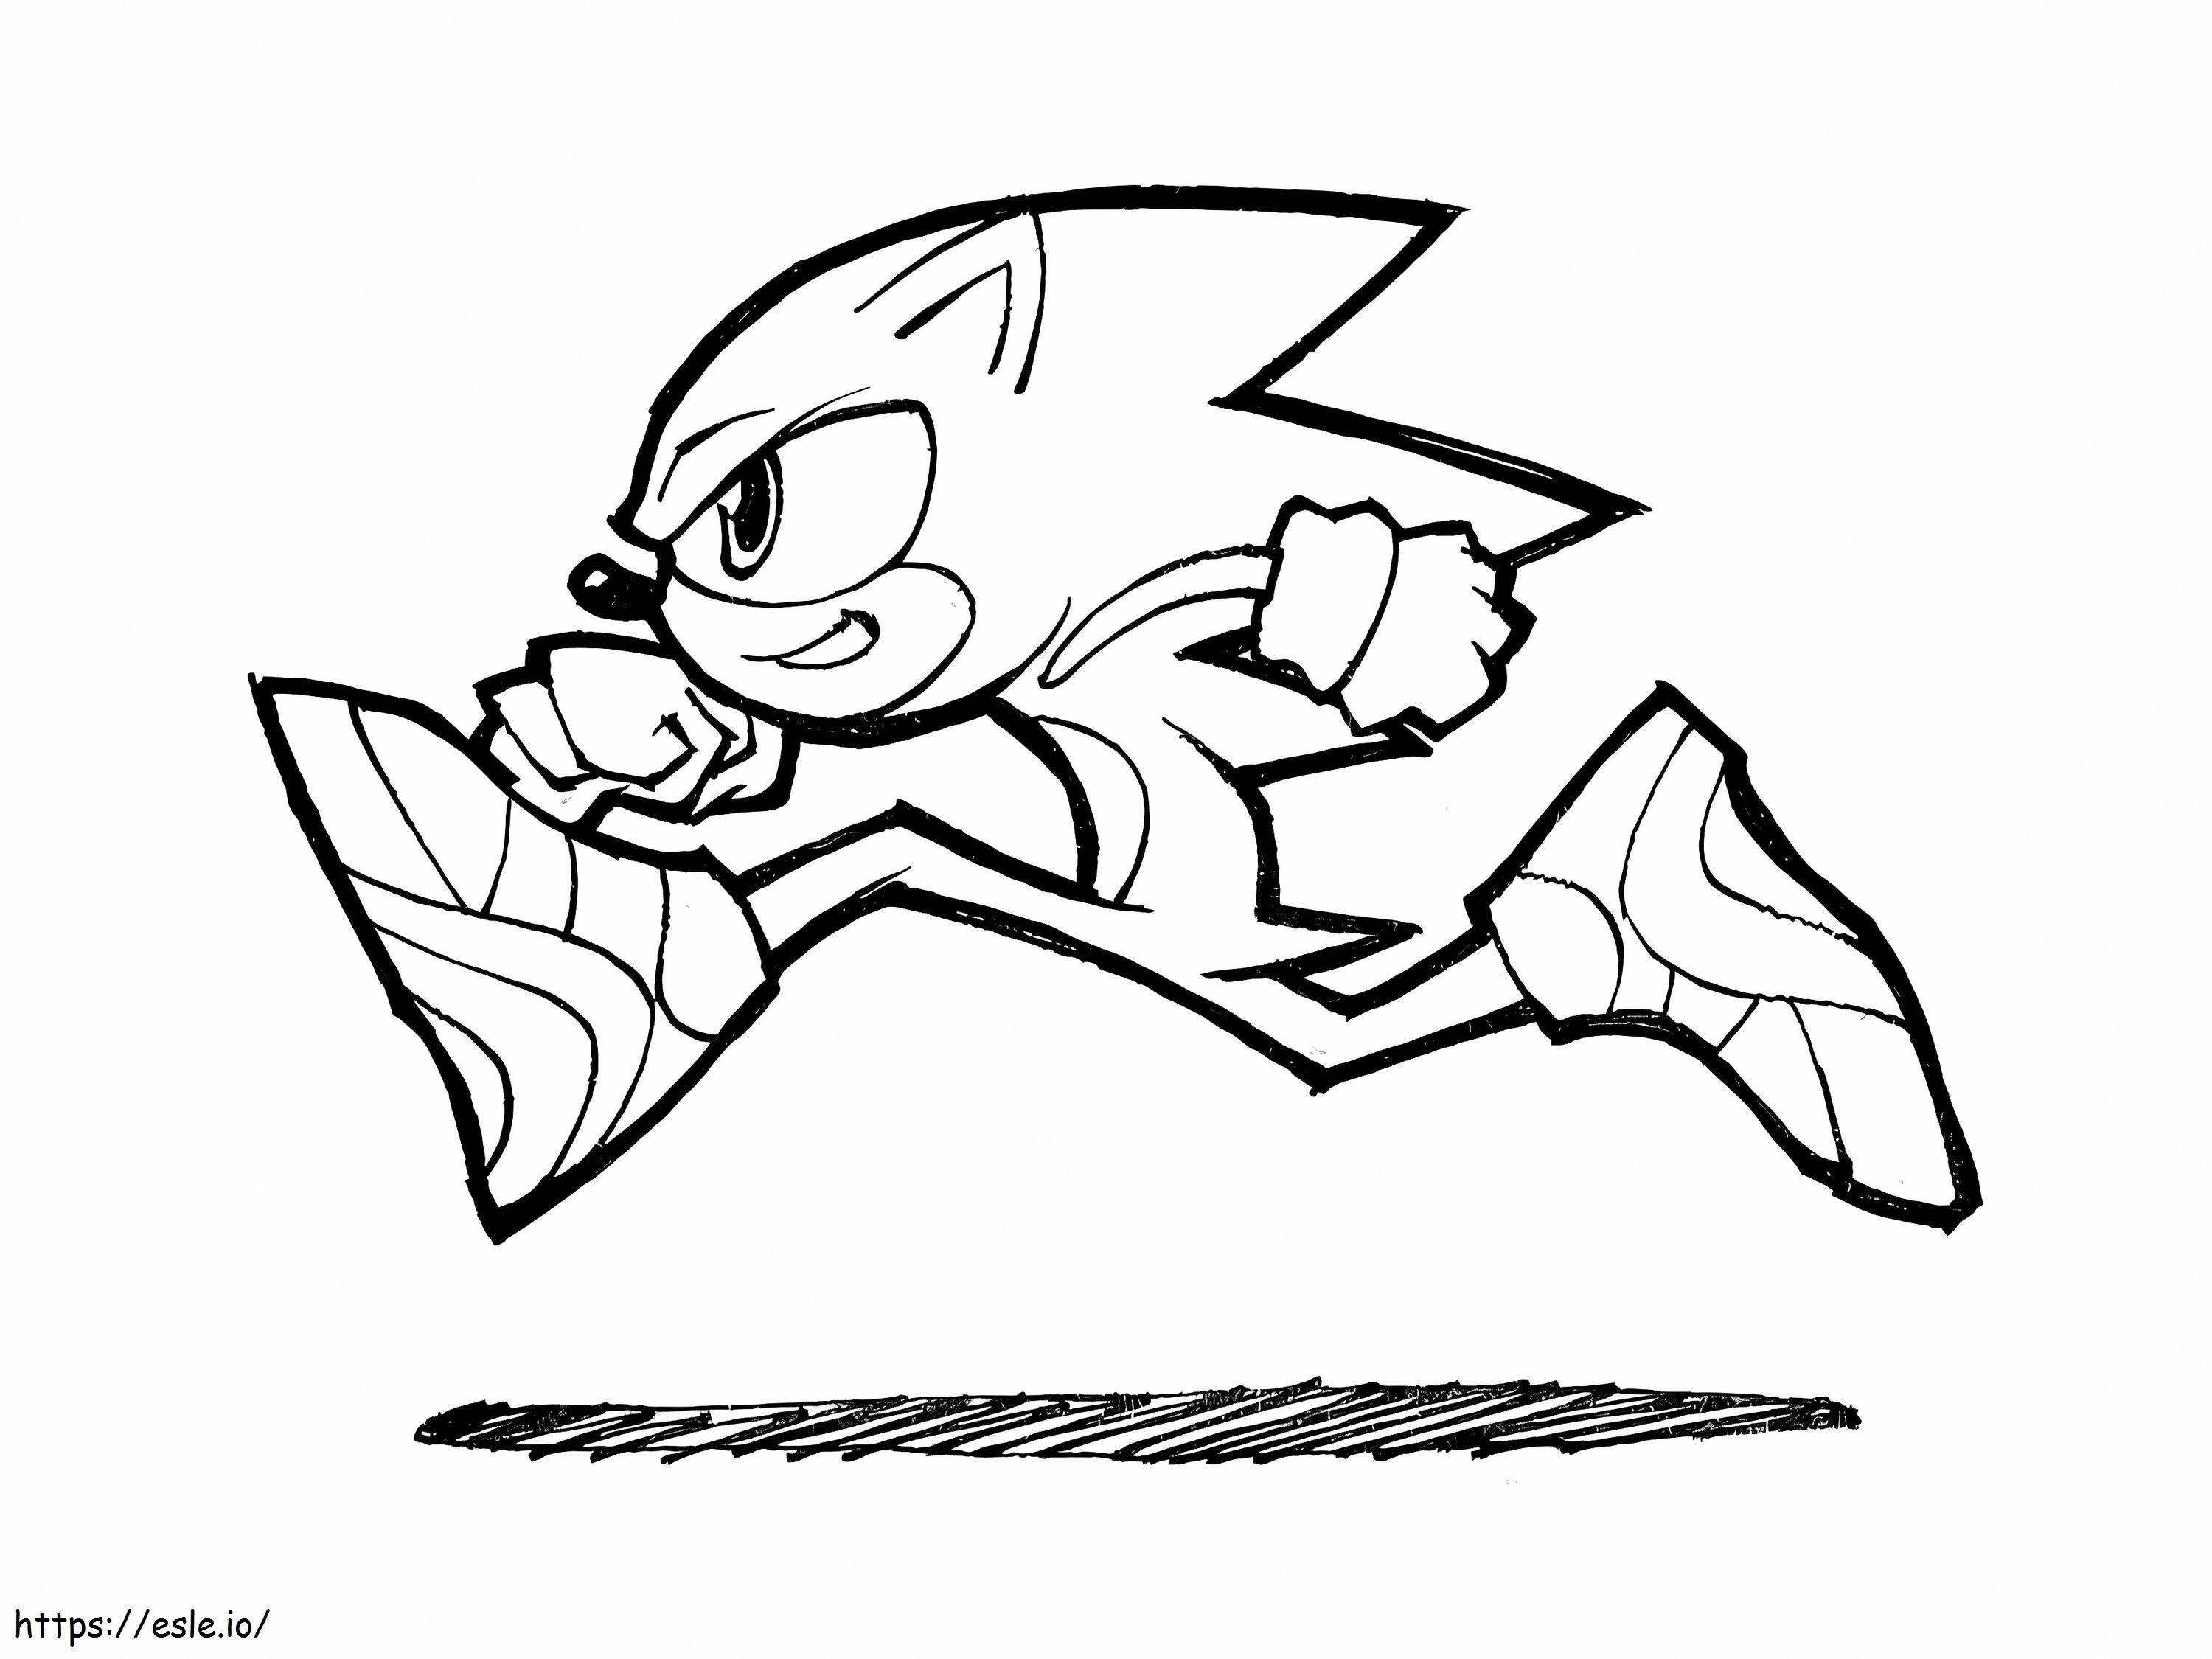 Druckbare Sonic Runs ausmalbilder